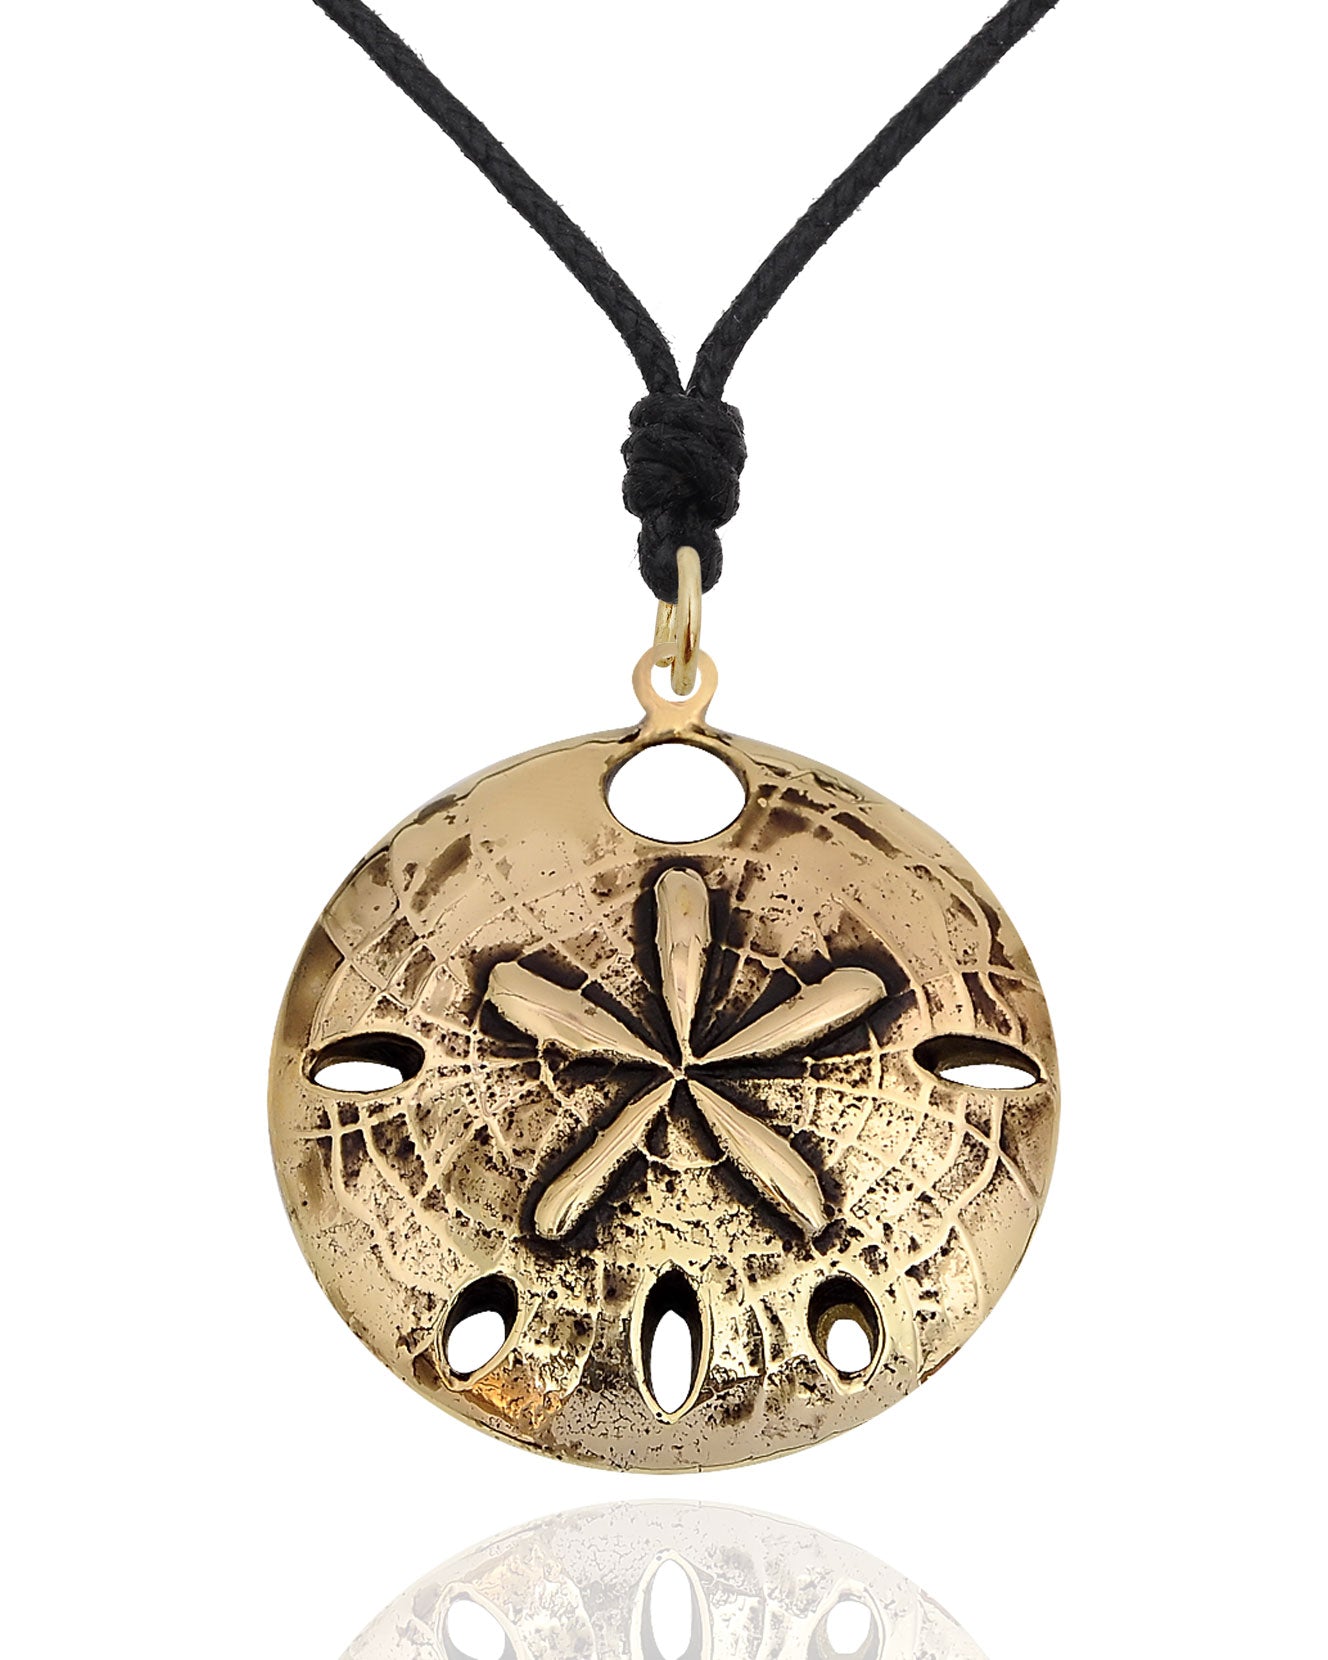 Sand Dollar Ocean Handmade Brass Necklace Pendant Jewelry